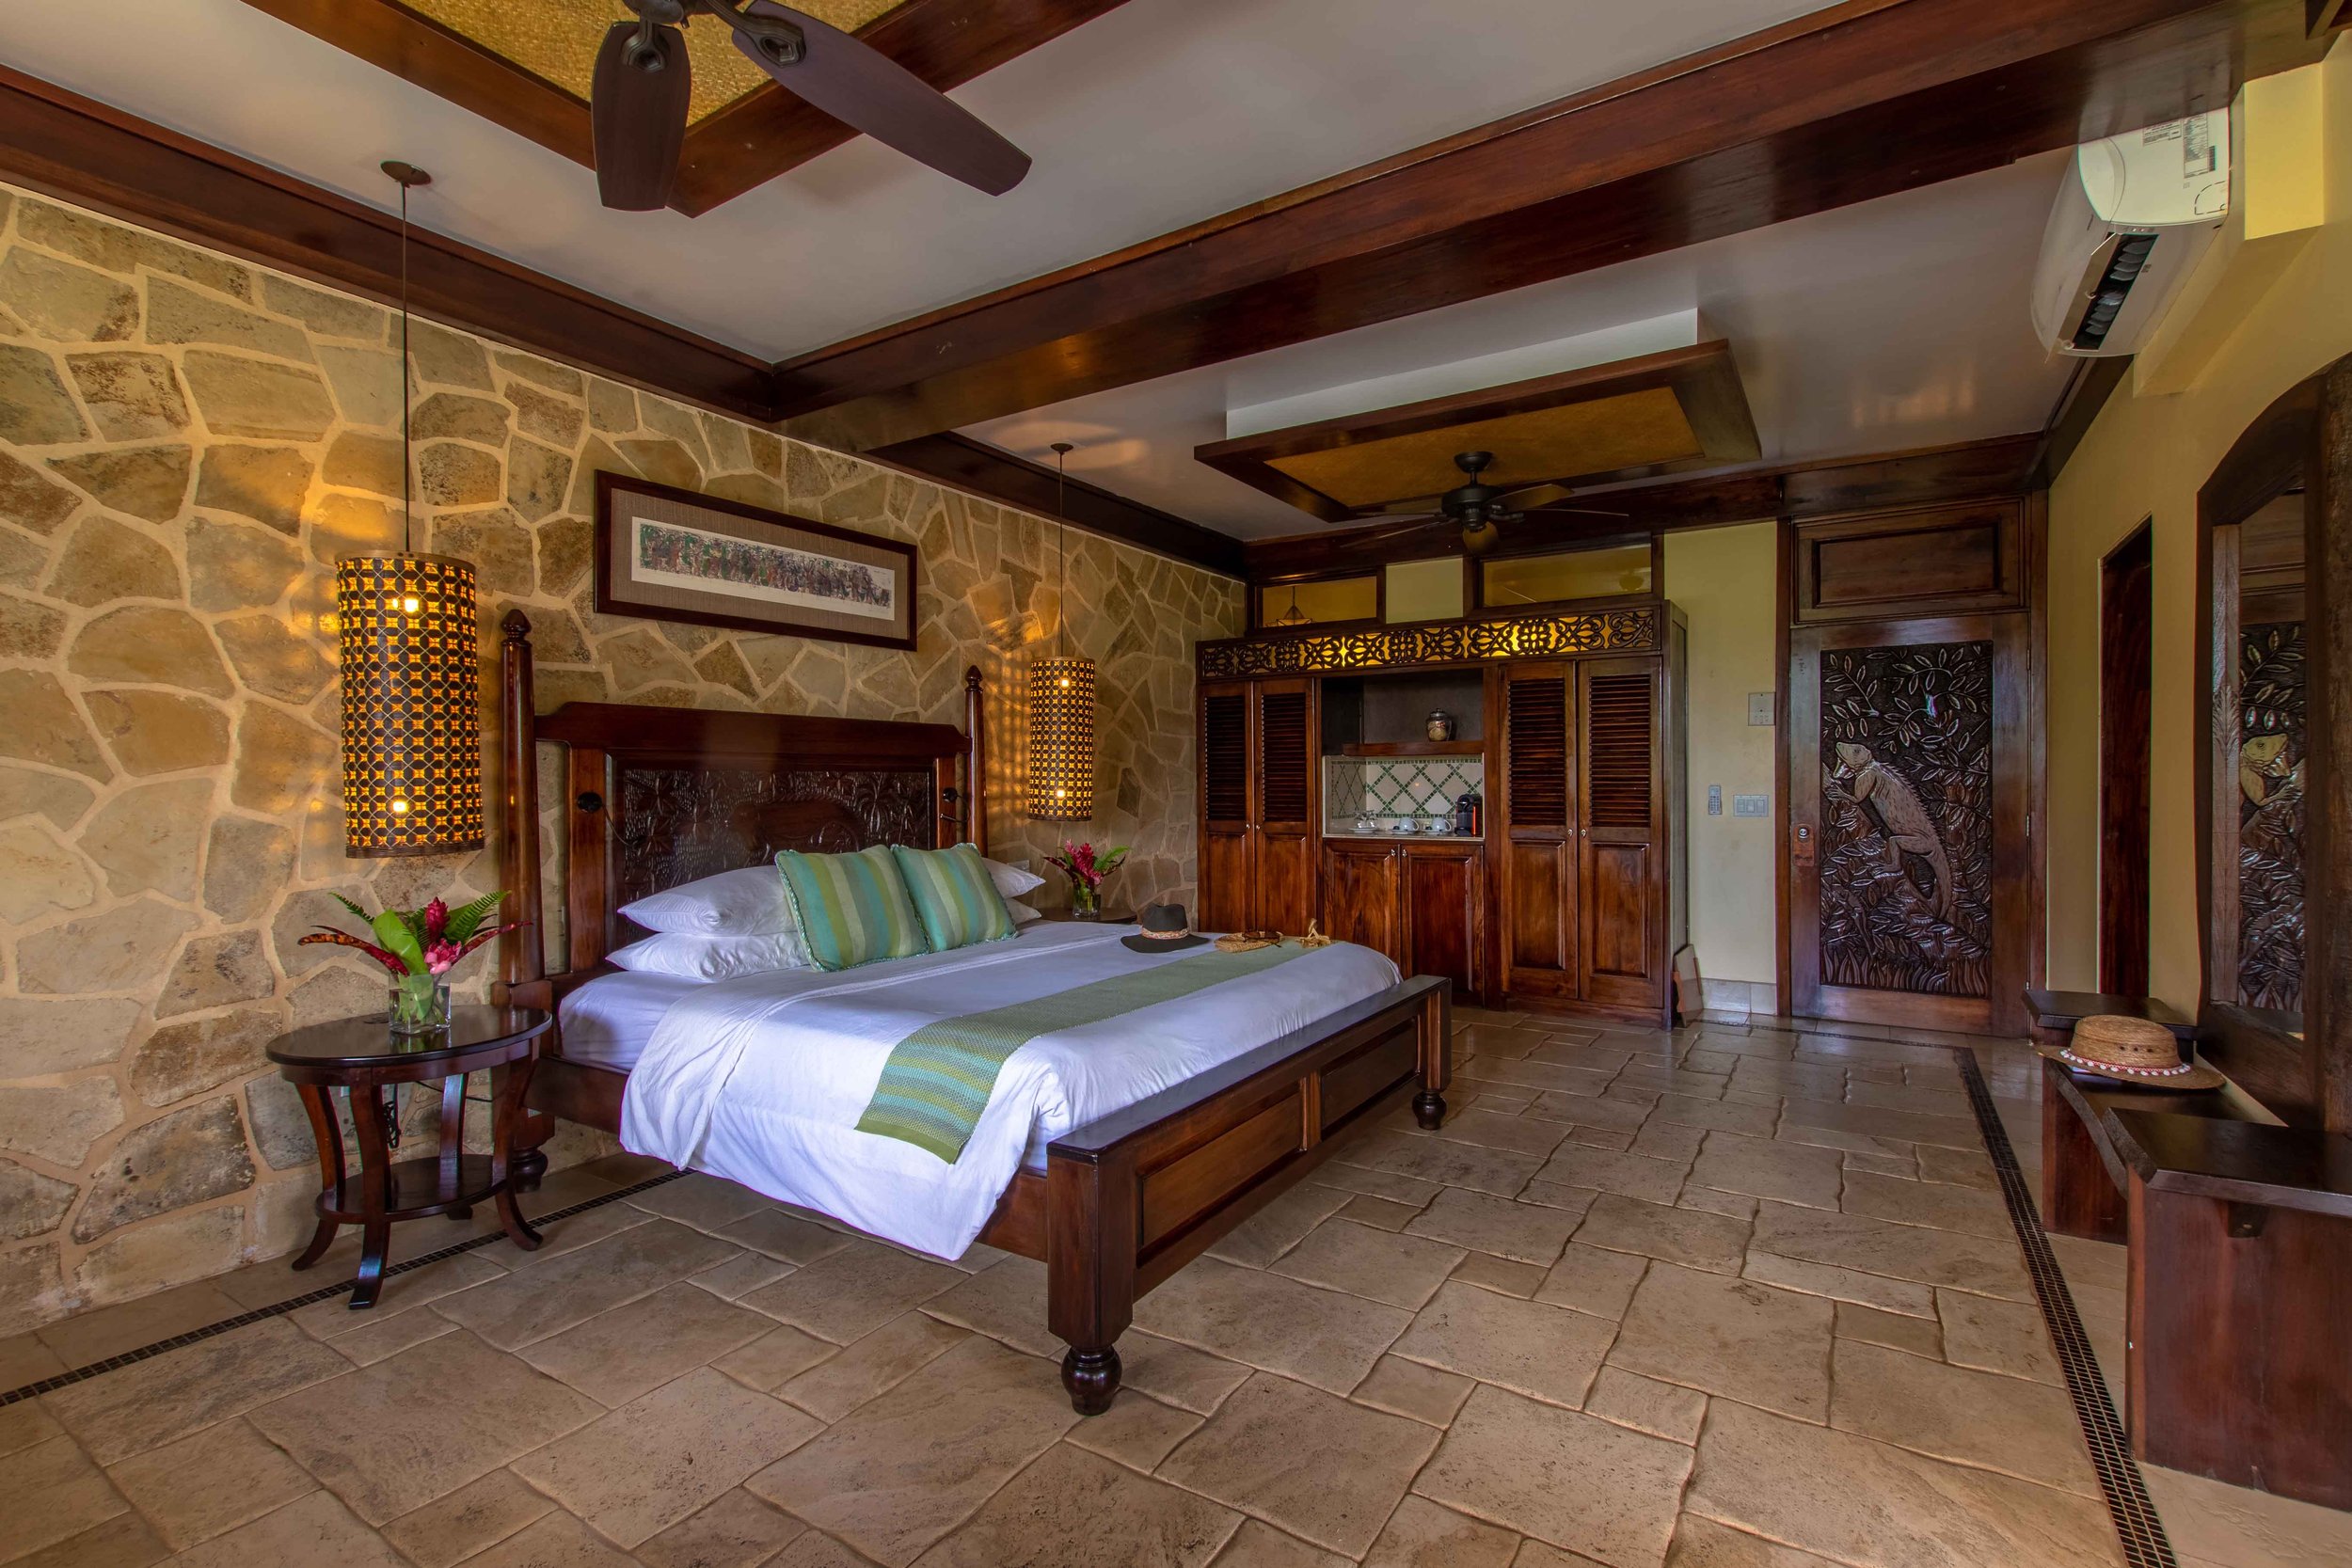 Belize Hotel | Sleeping Giant Rainforest Lodge